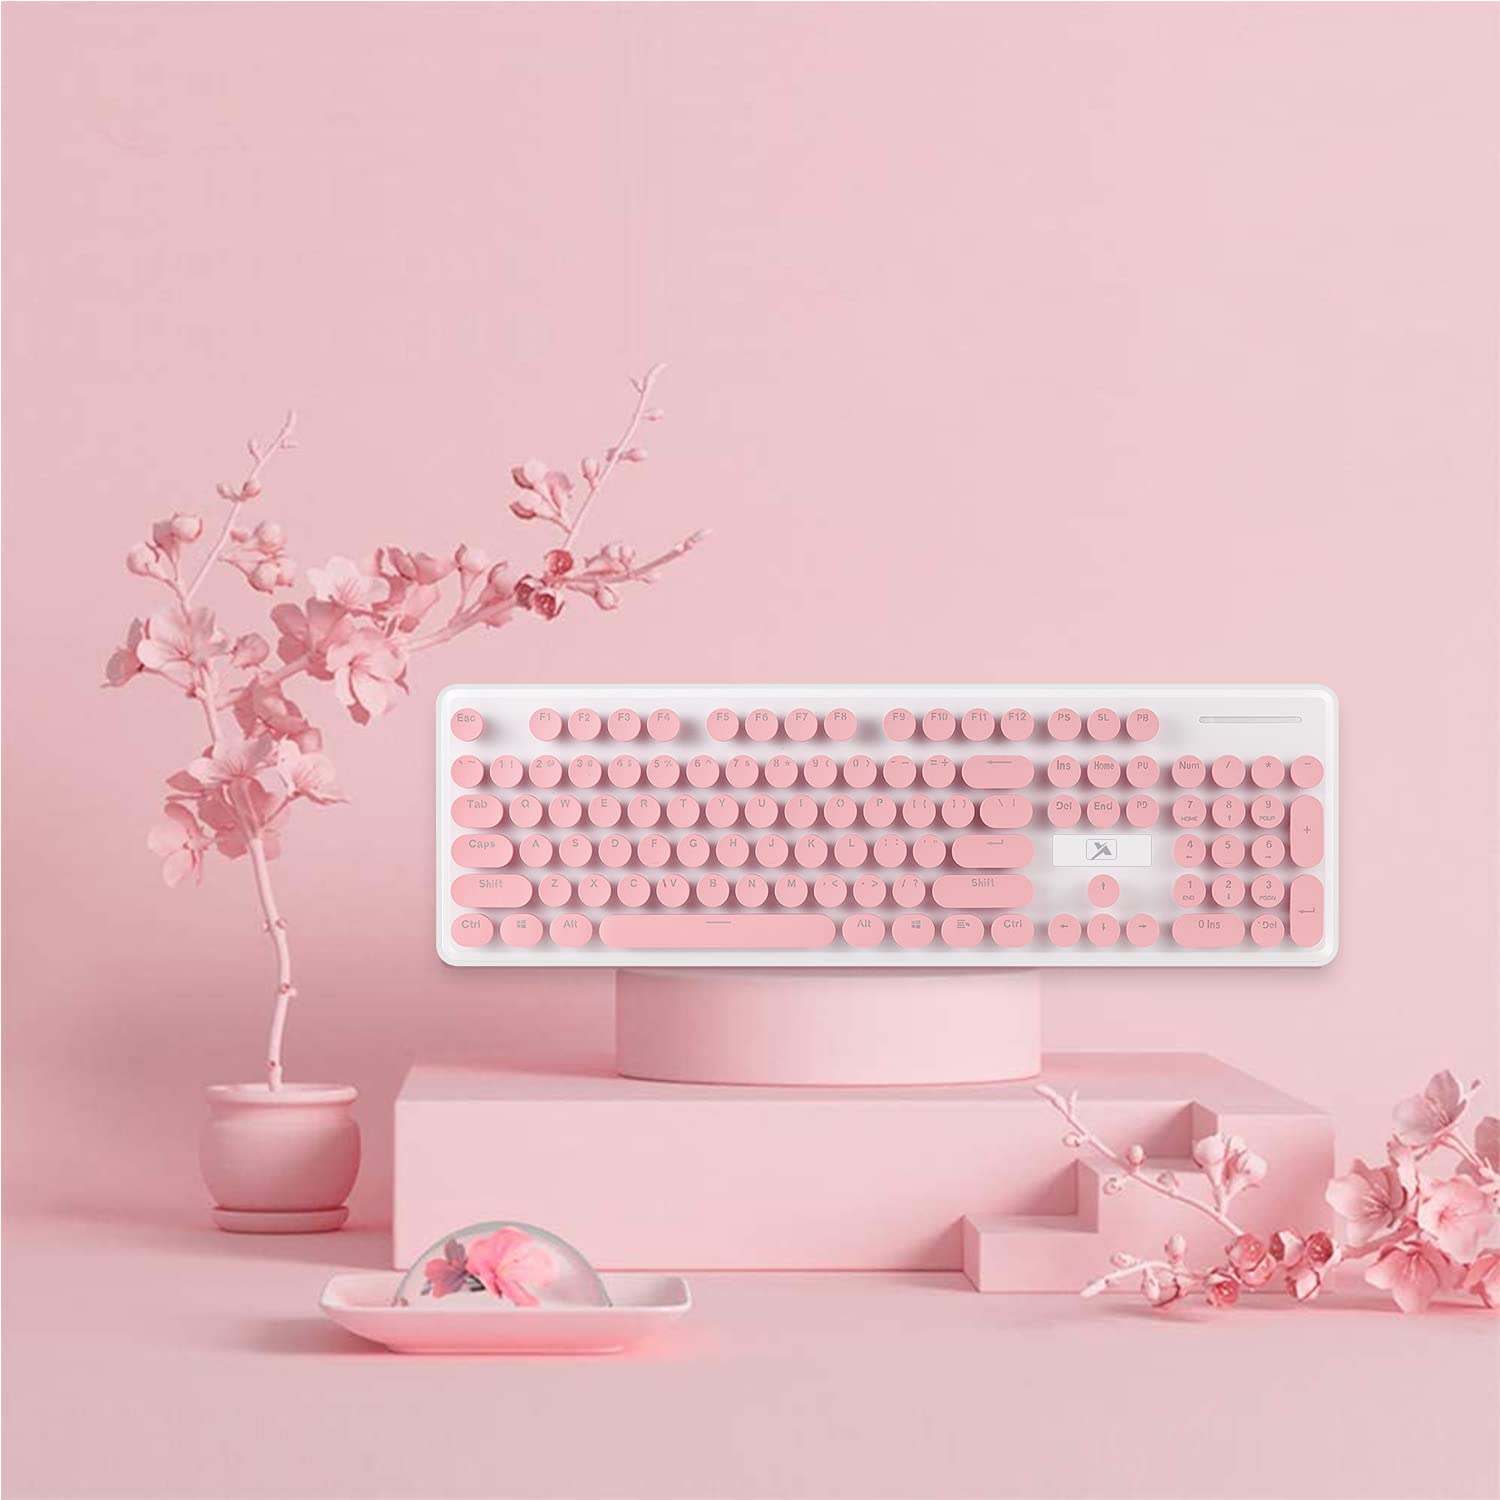 Aesthetic Keyboard Background